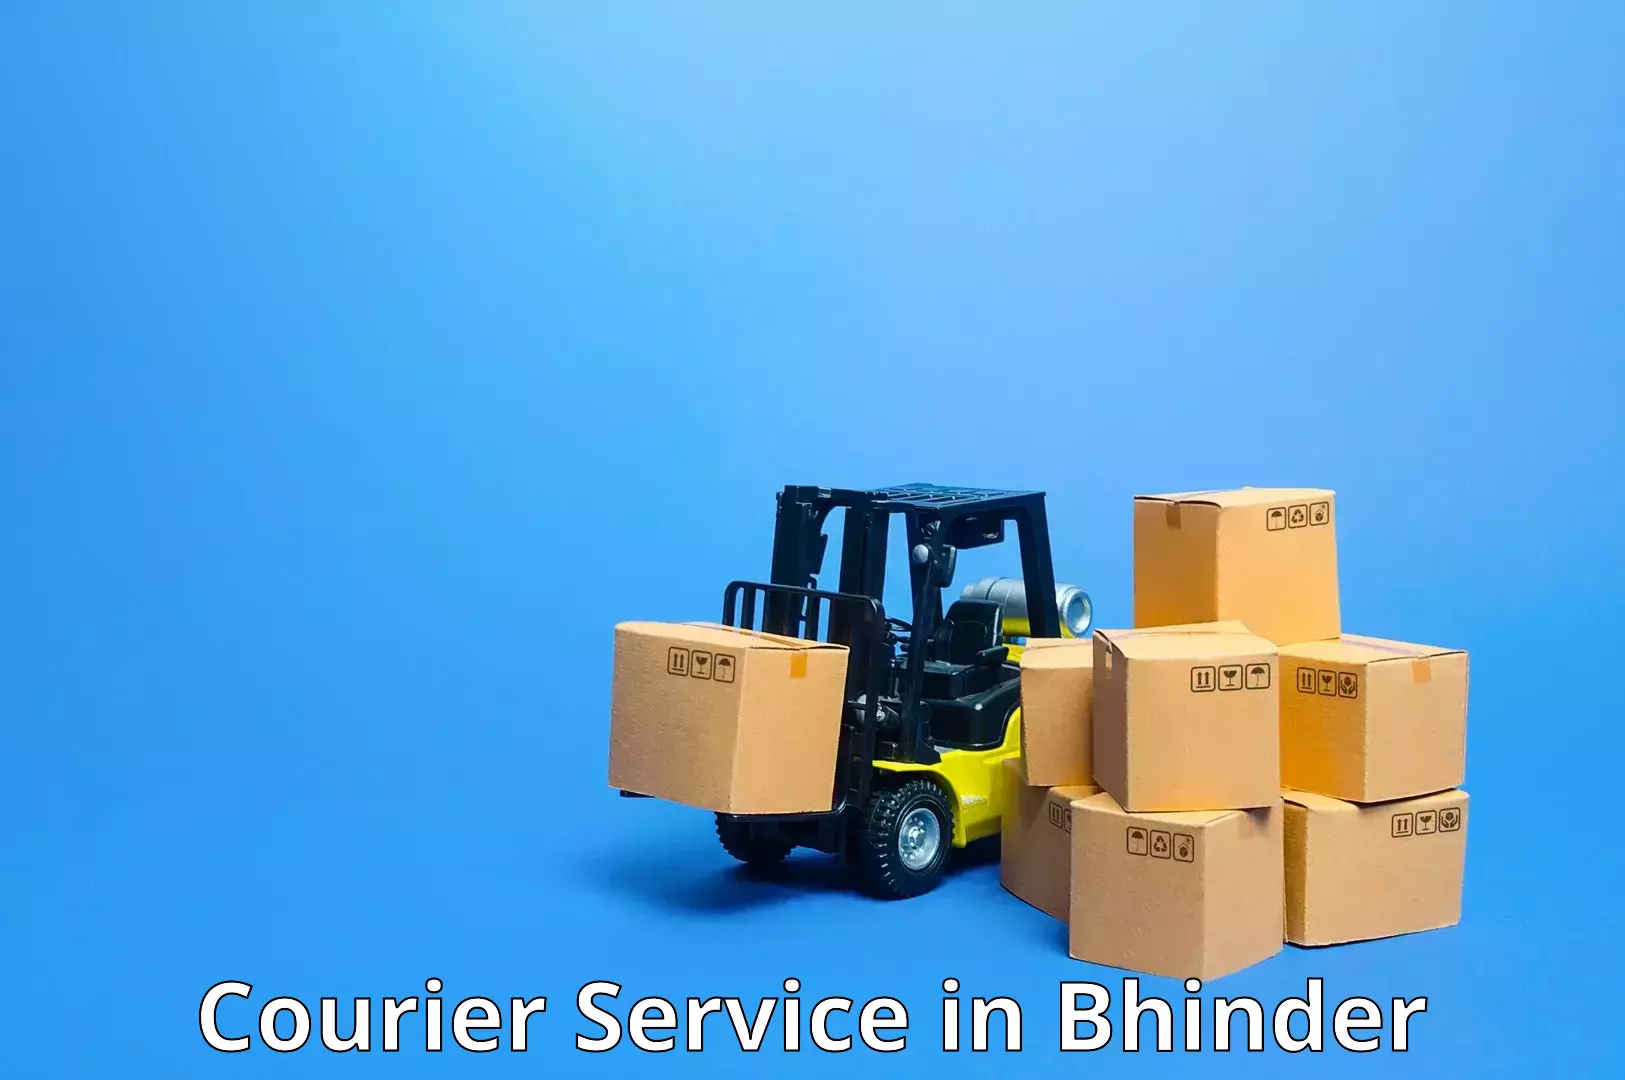 Scheduled delivery in Bhinder